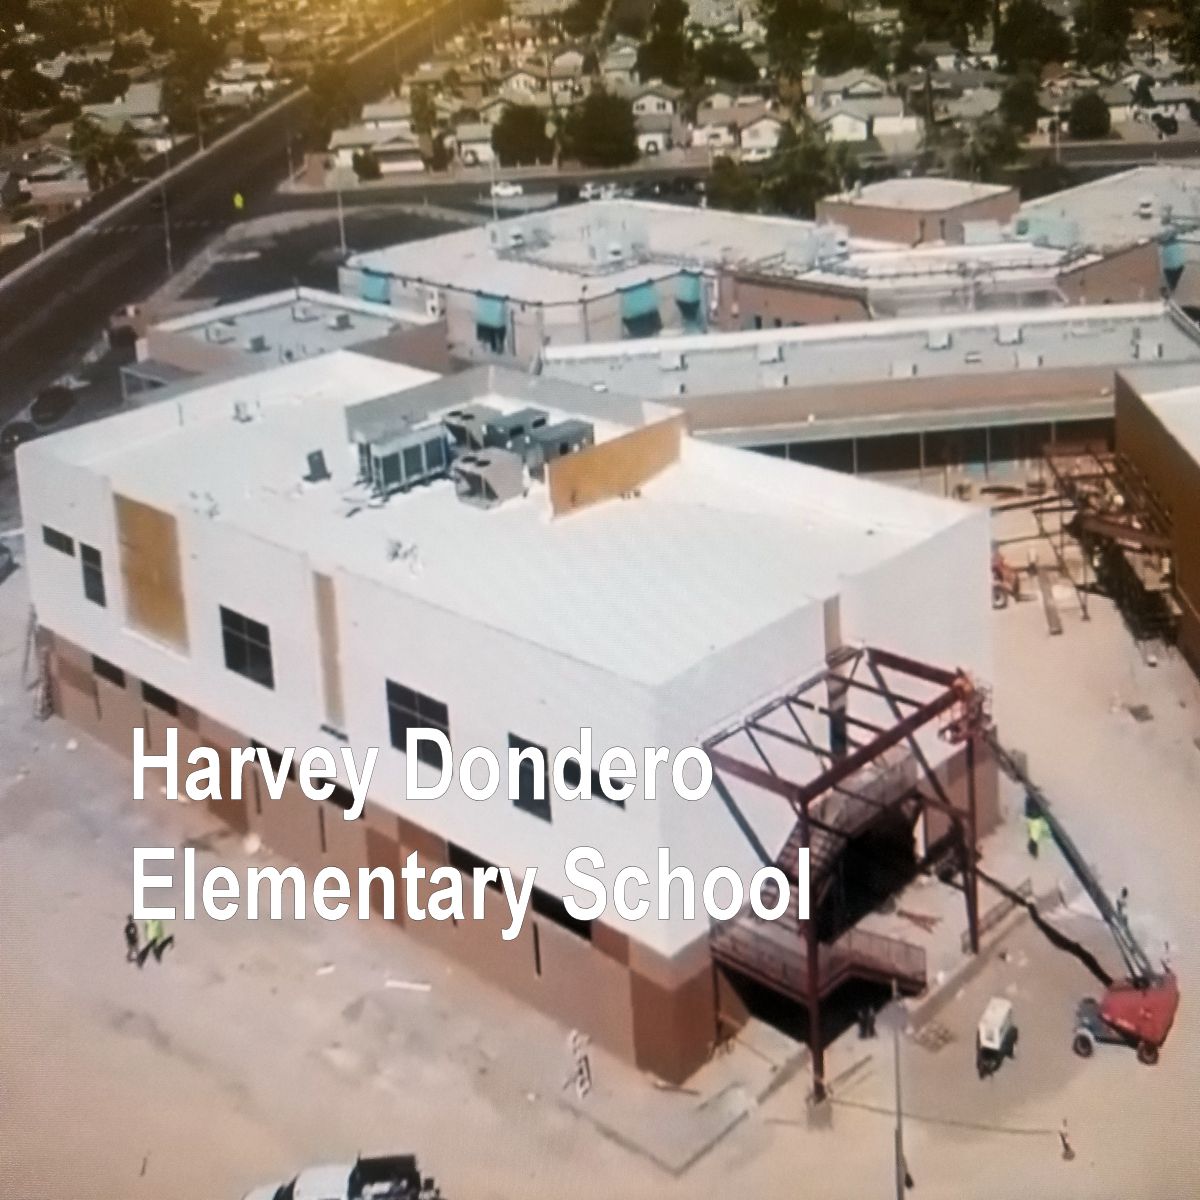 Harvey Dundero Elementary School 1